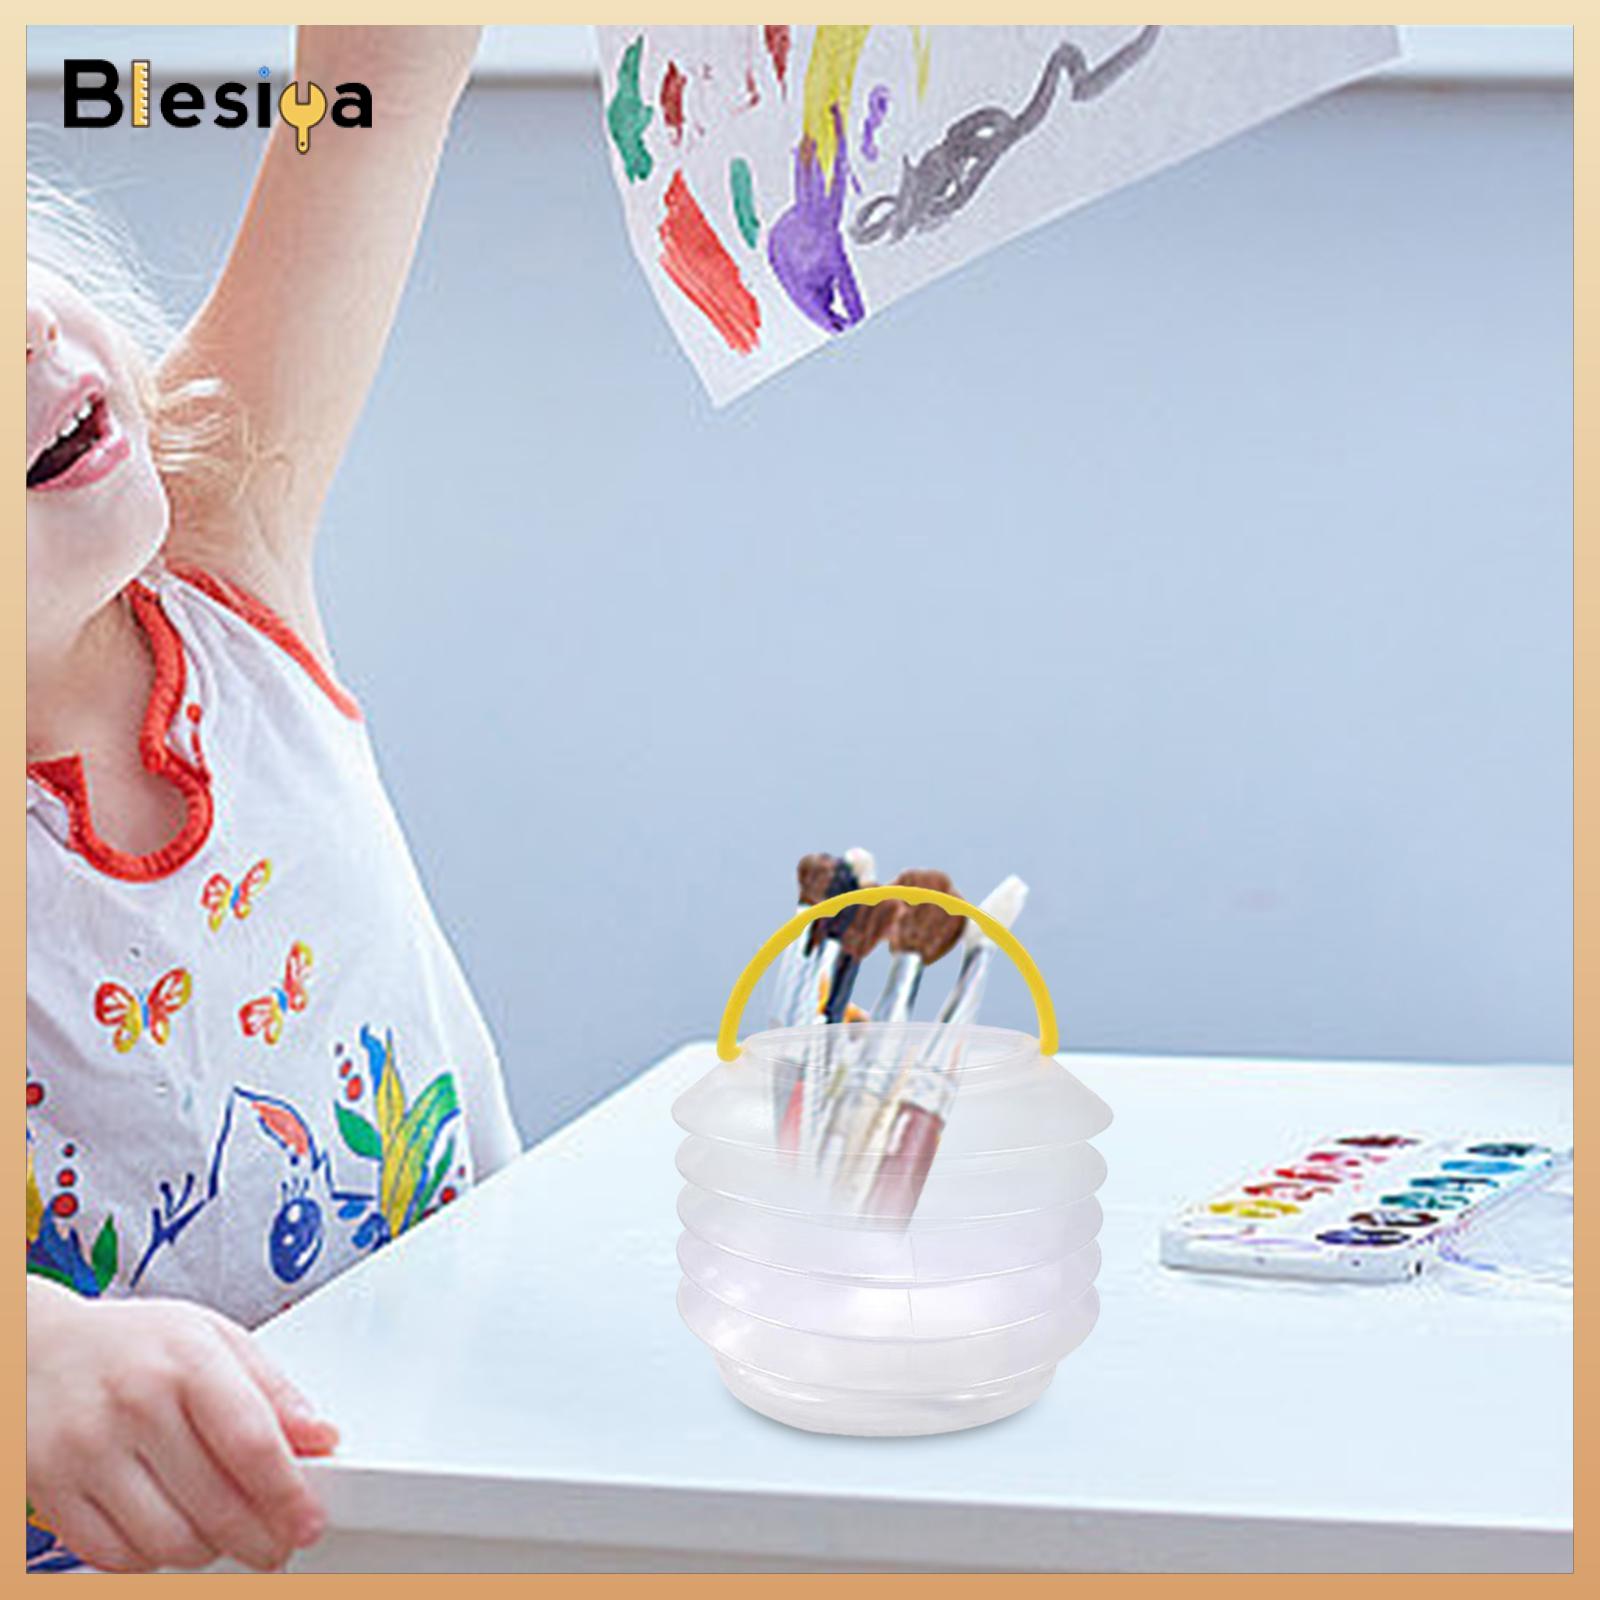 Blesiya Paint Brush Wash Bucket Collapsible Painting Brush Basin for Kids